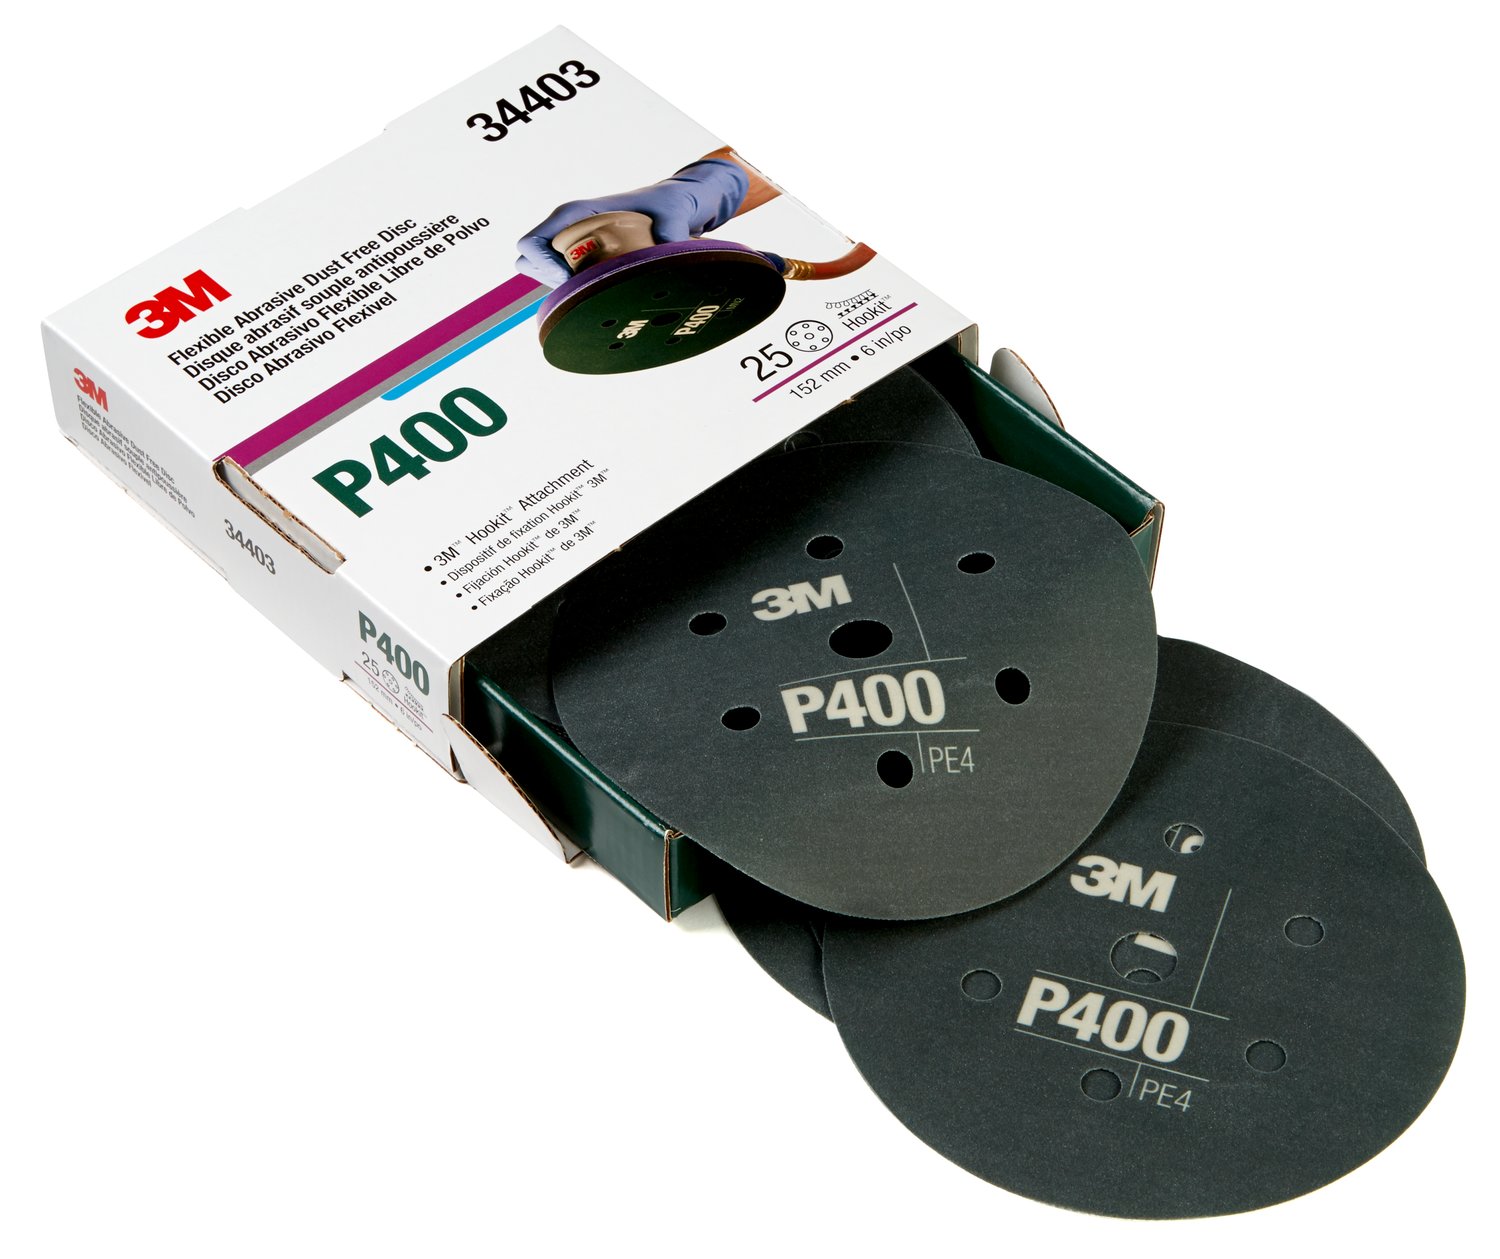 7100180074 - 3M Hookit Flexible Abrasive Disc 270J, 34416, 6 in 15H, Dust Free,
P320, 25 disc per box, 5 boxes per case